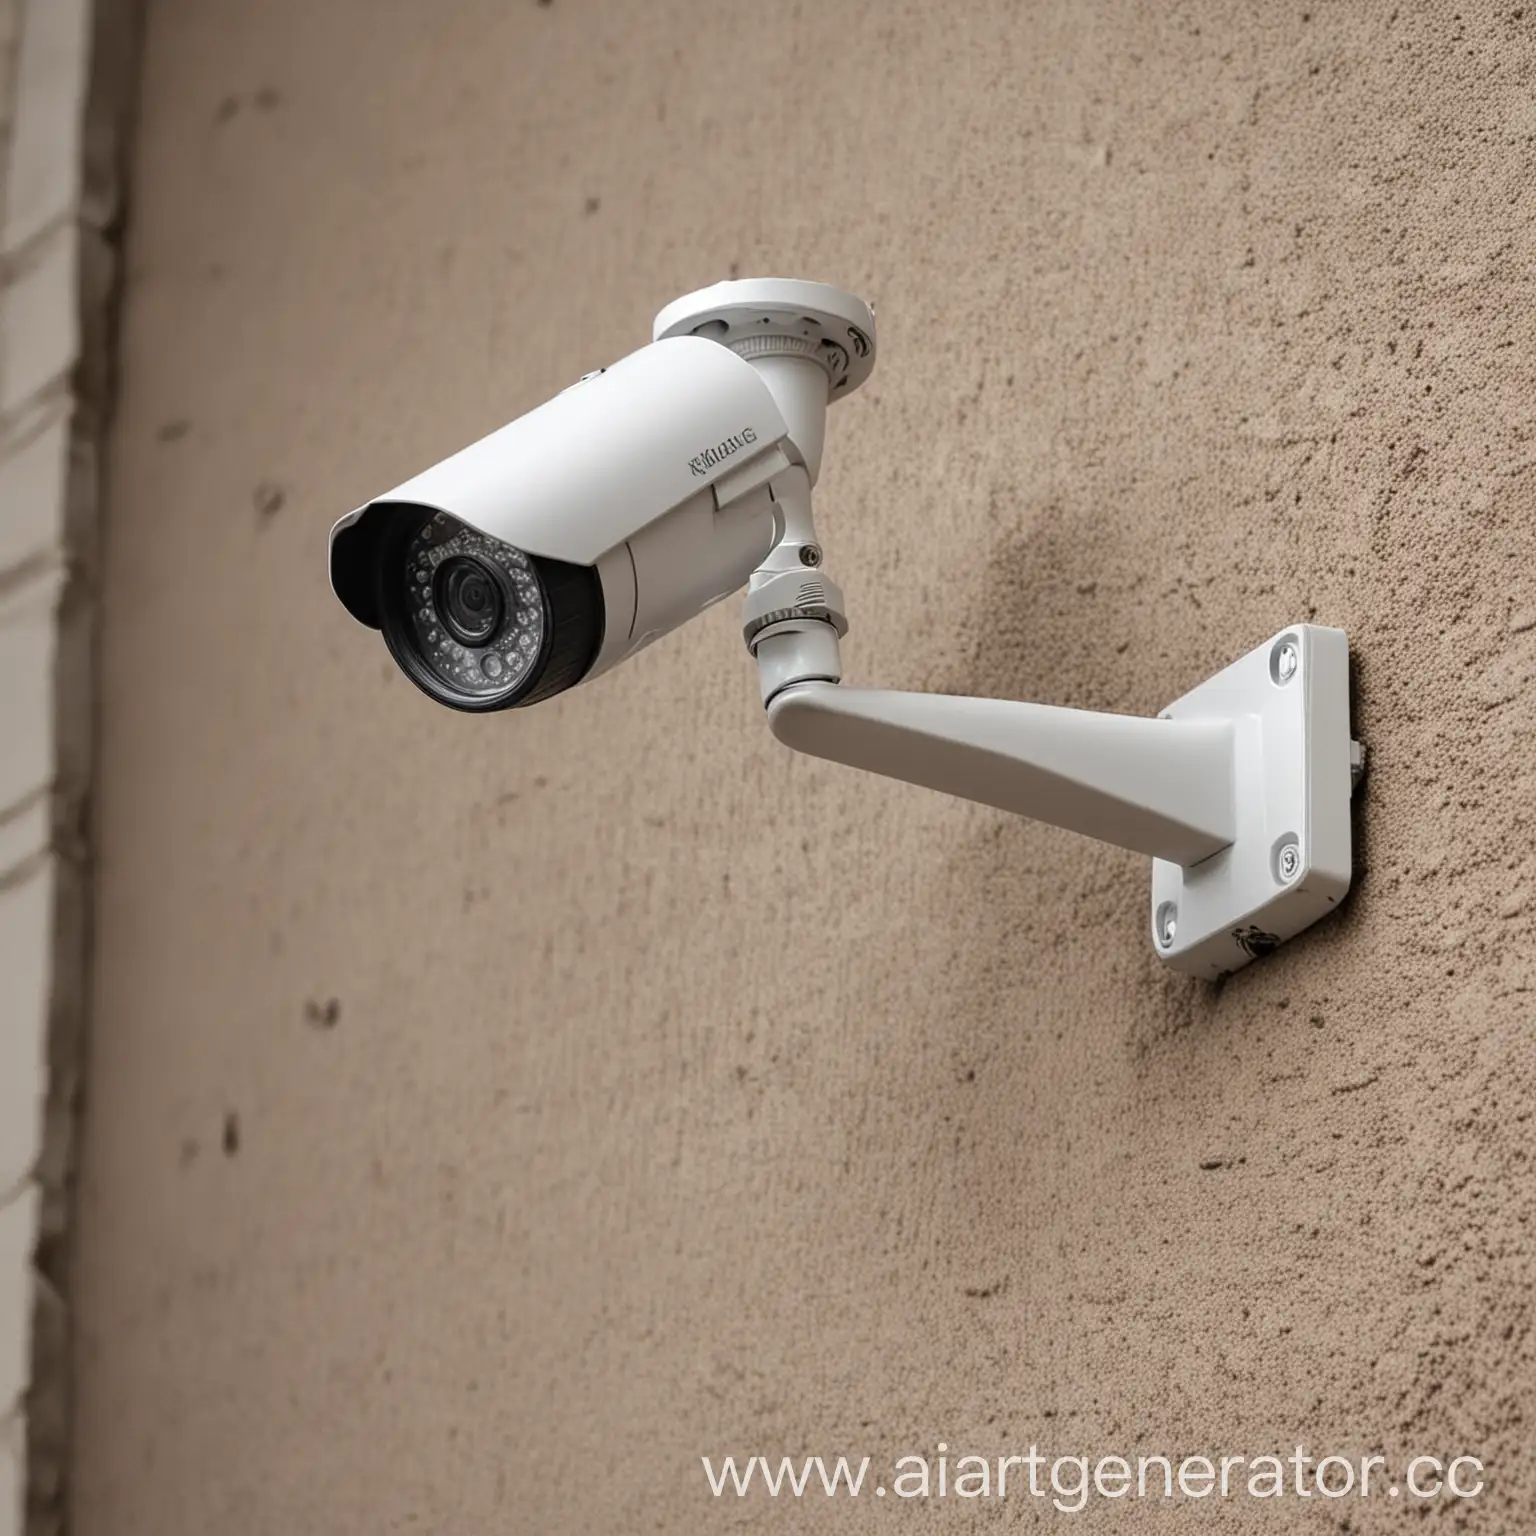 Modern-Video-Surveillance-System-Monitoring-Urban-Environment